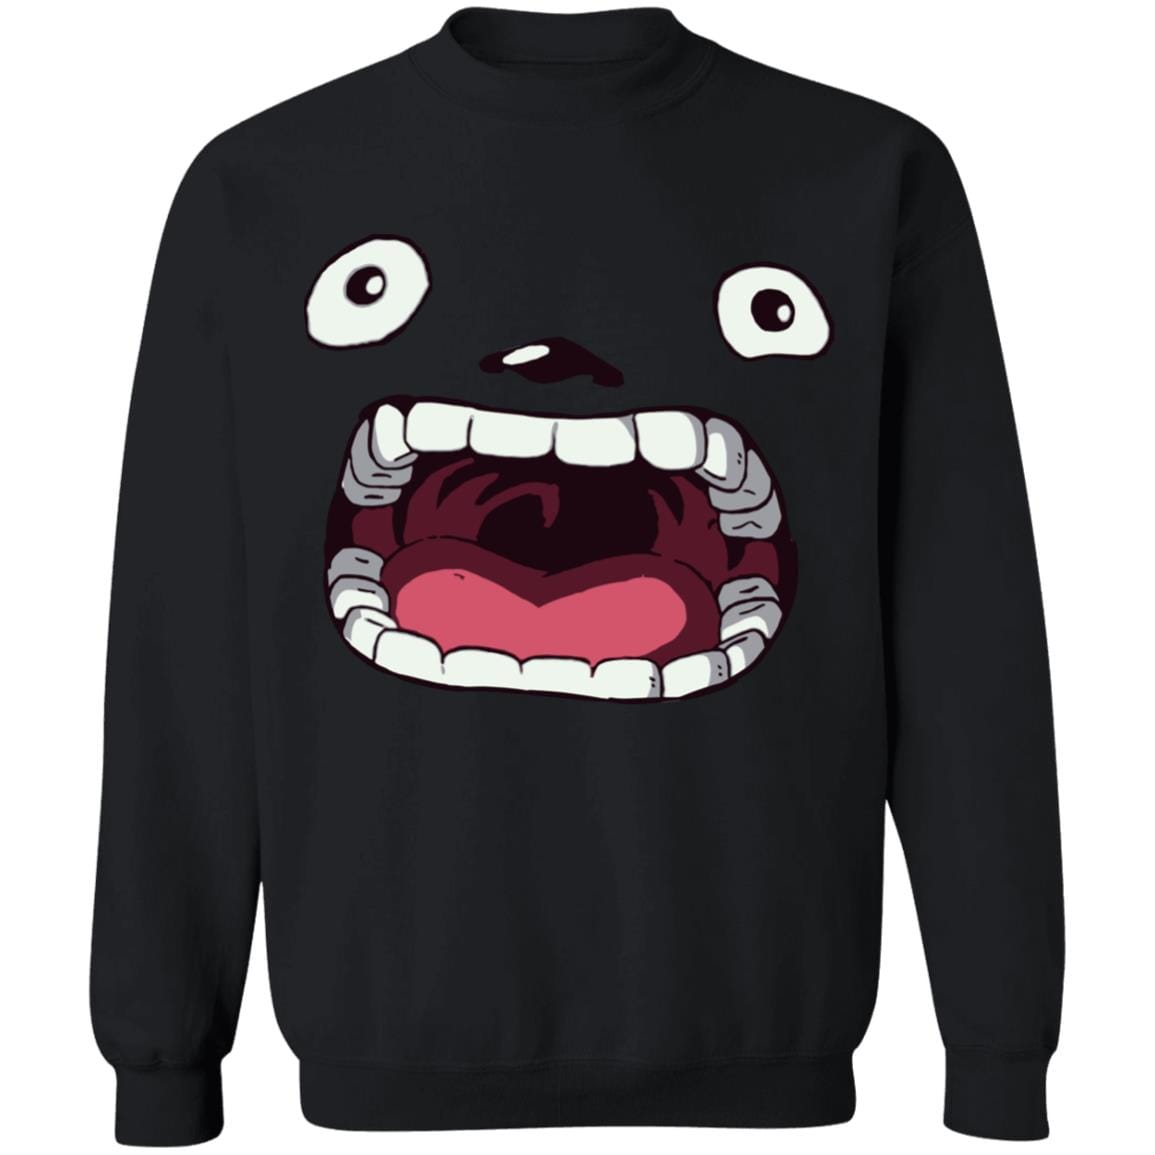 My Neighbor Totoro – Big Mouth Sweatshirt